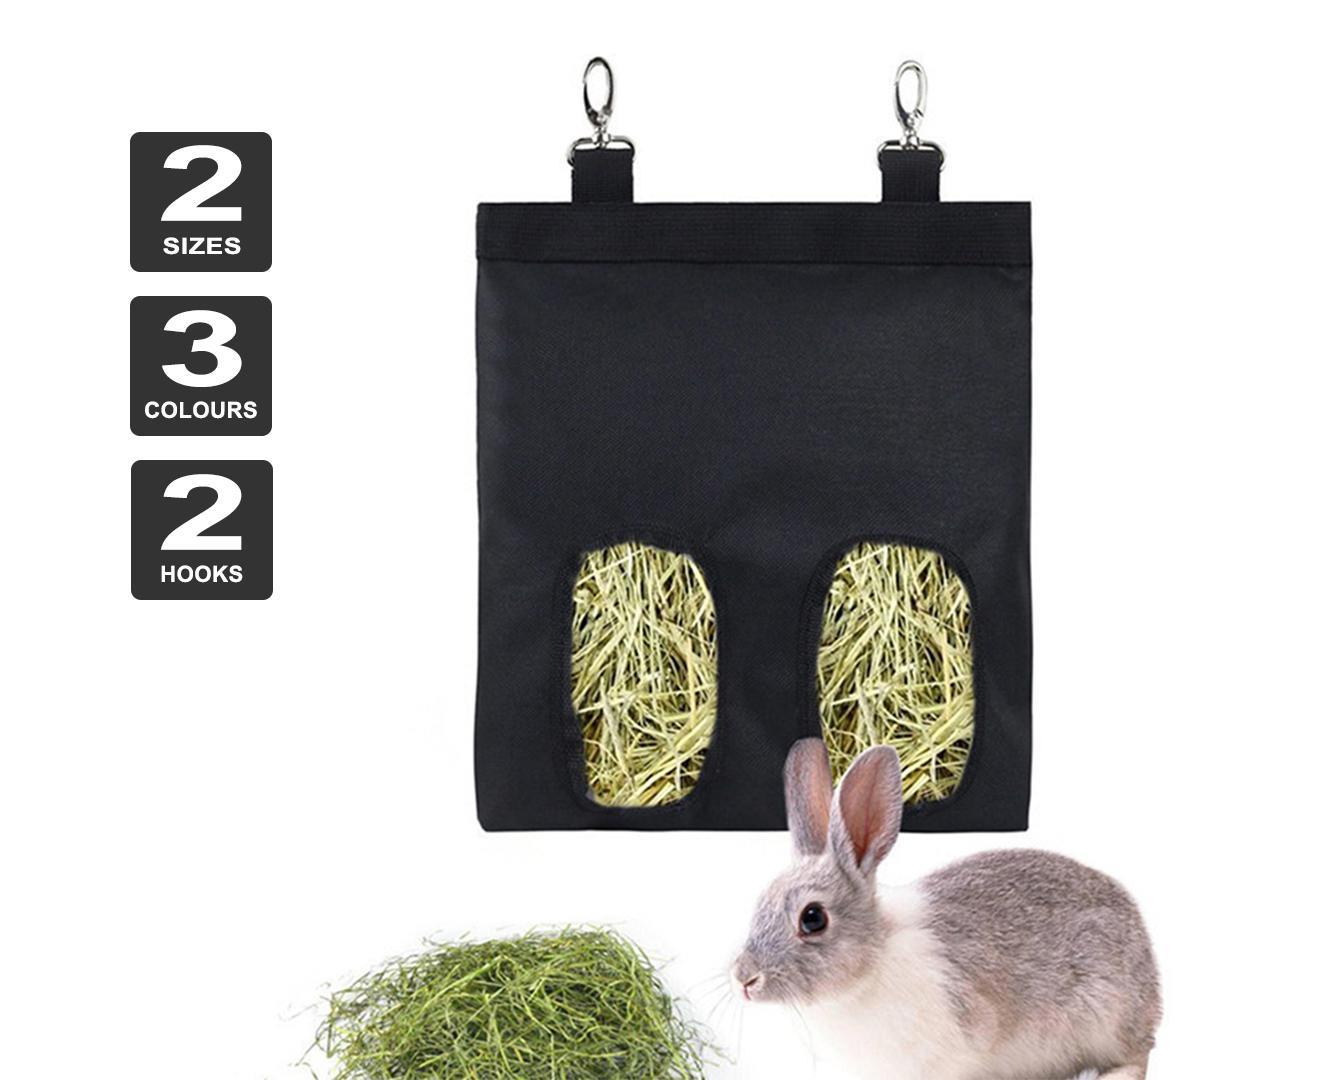 Qttie Rabbit Hay Bag Guinea Pig Pet Hanging Pouch Feeder Holder Eating Feeding-2 Grids(Black)